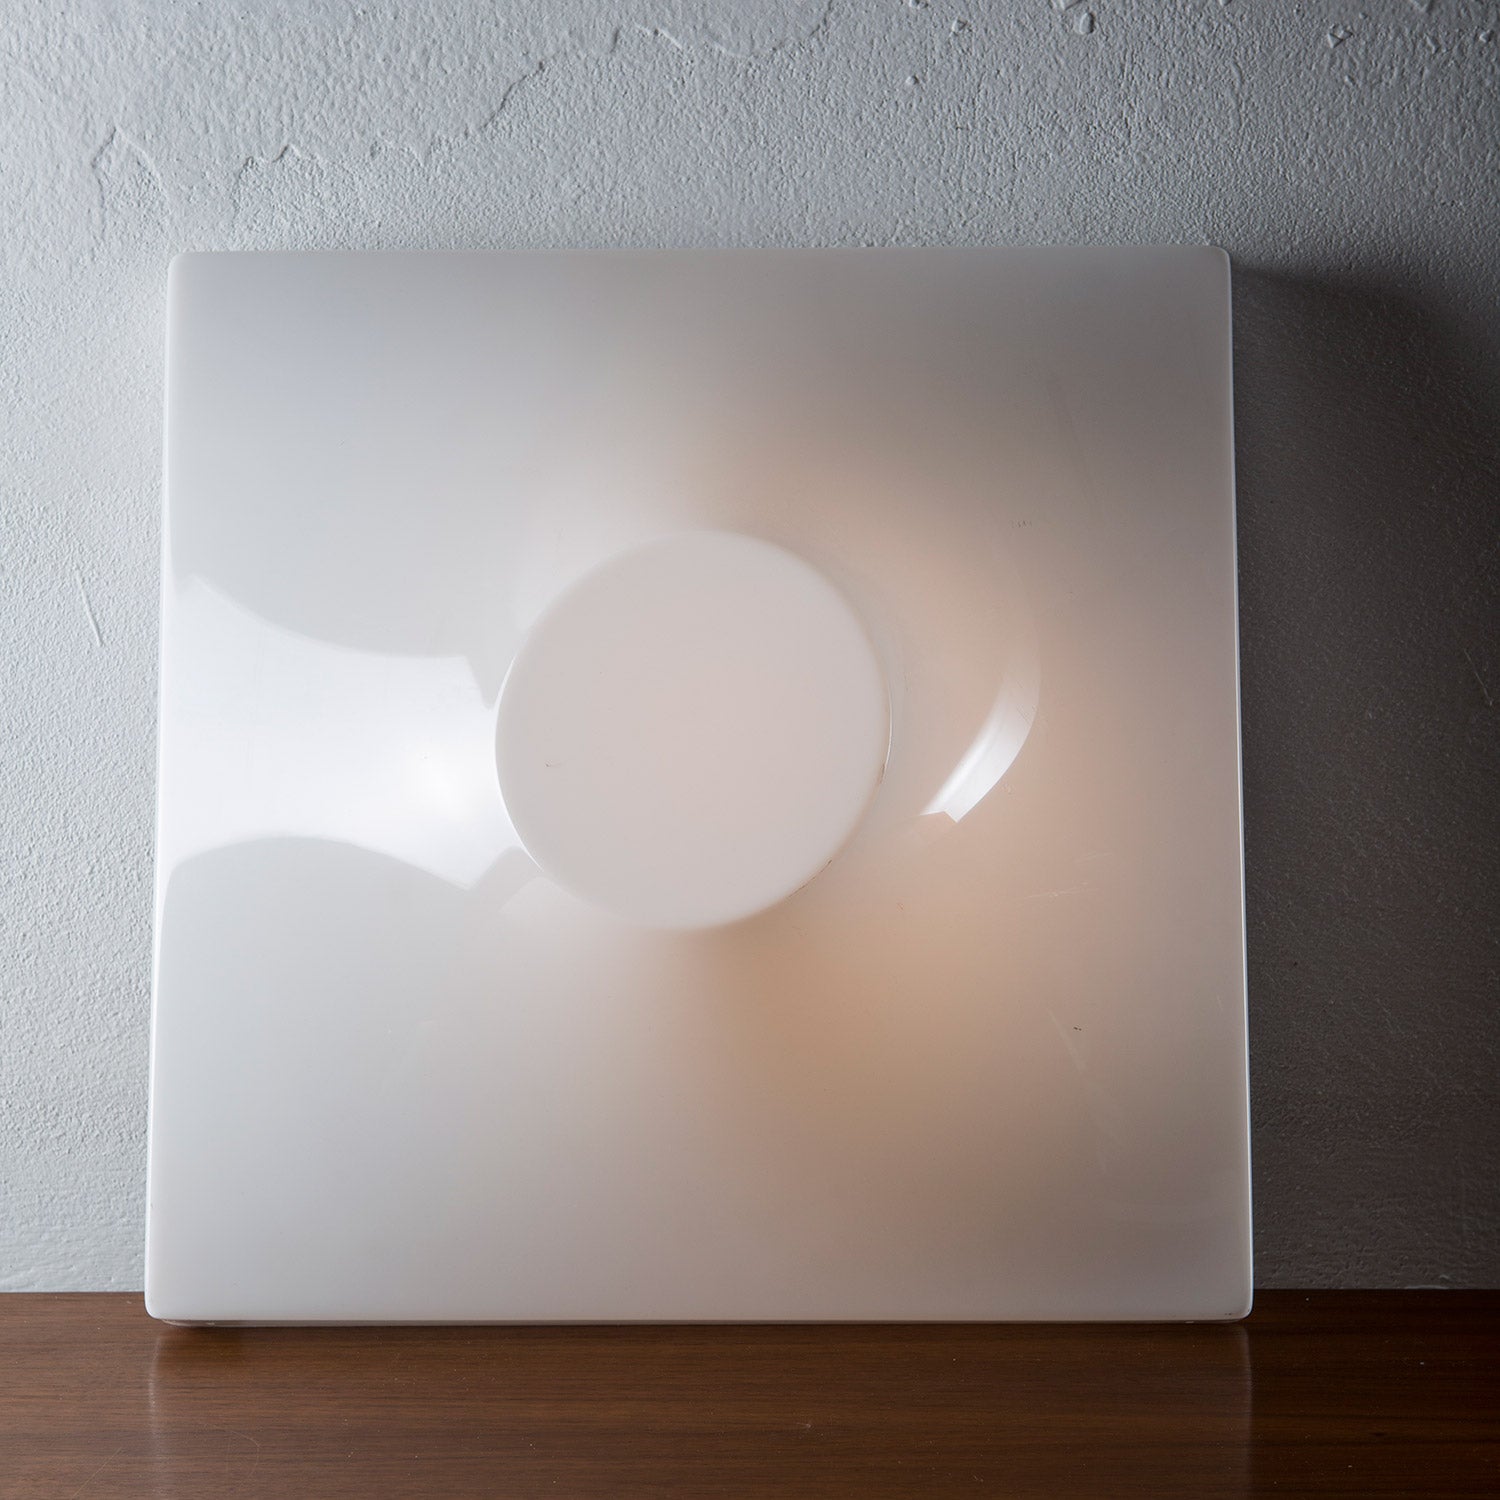 Table Lamp by Ennio Chiggio for Emmezeta